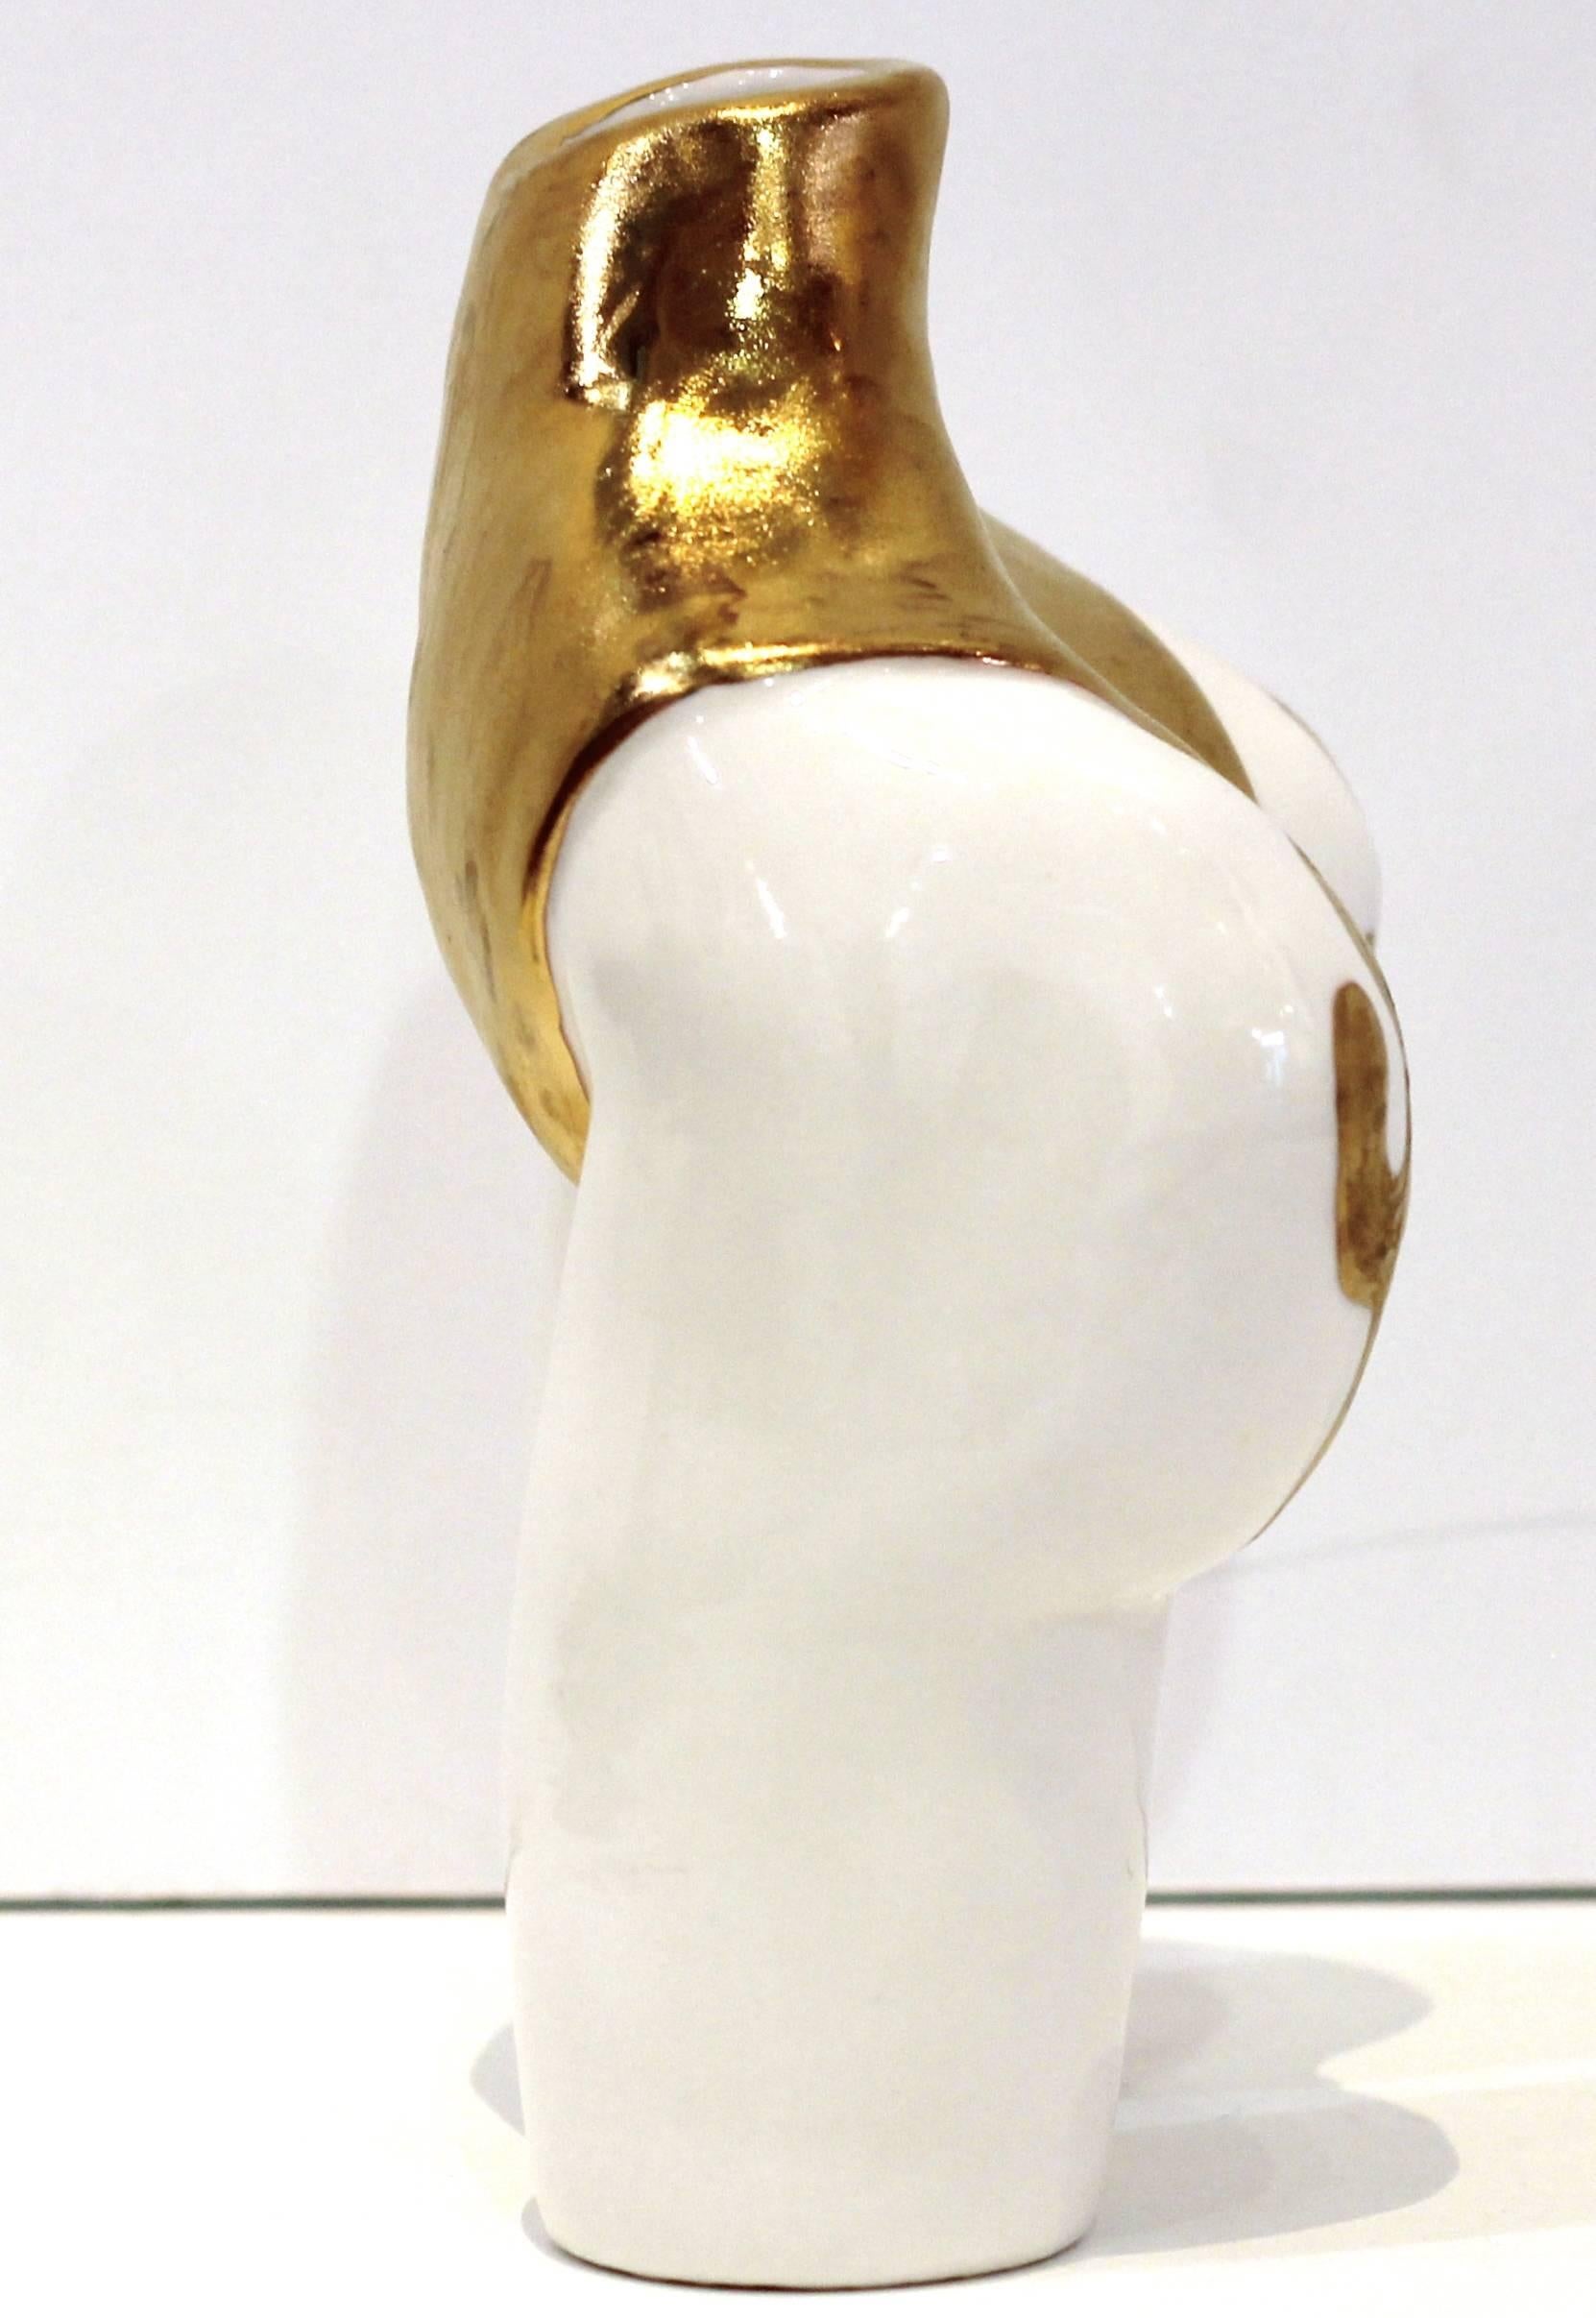 Cactass - Gold Abstract Sculpture by Meegan Barnes